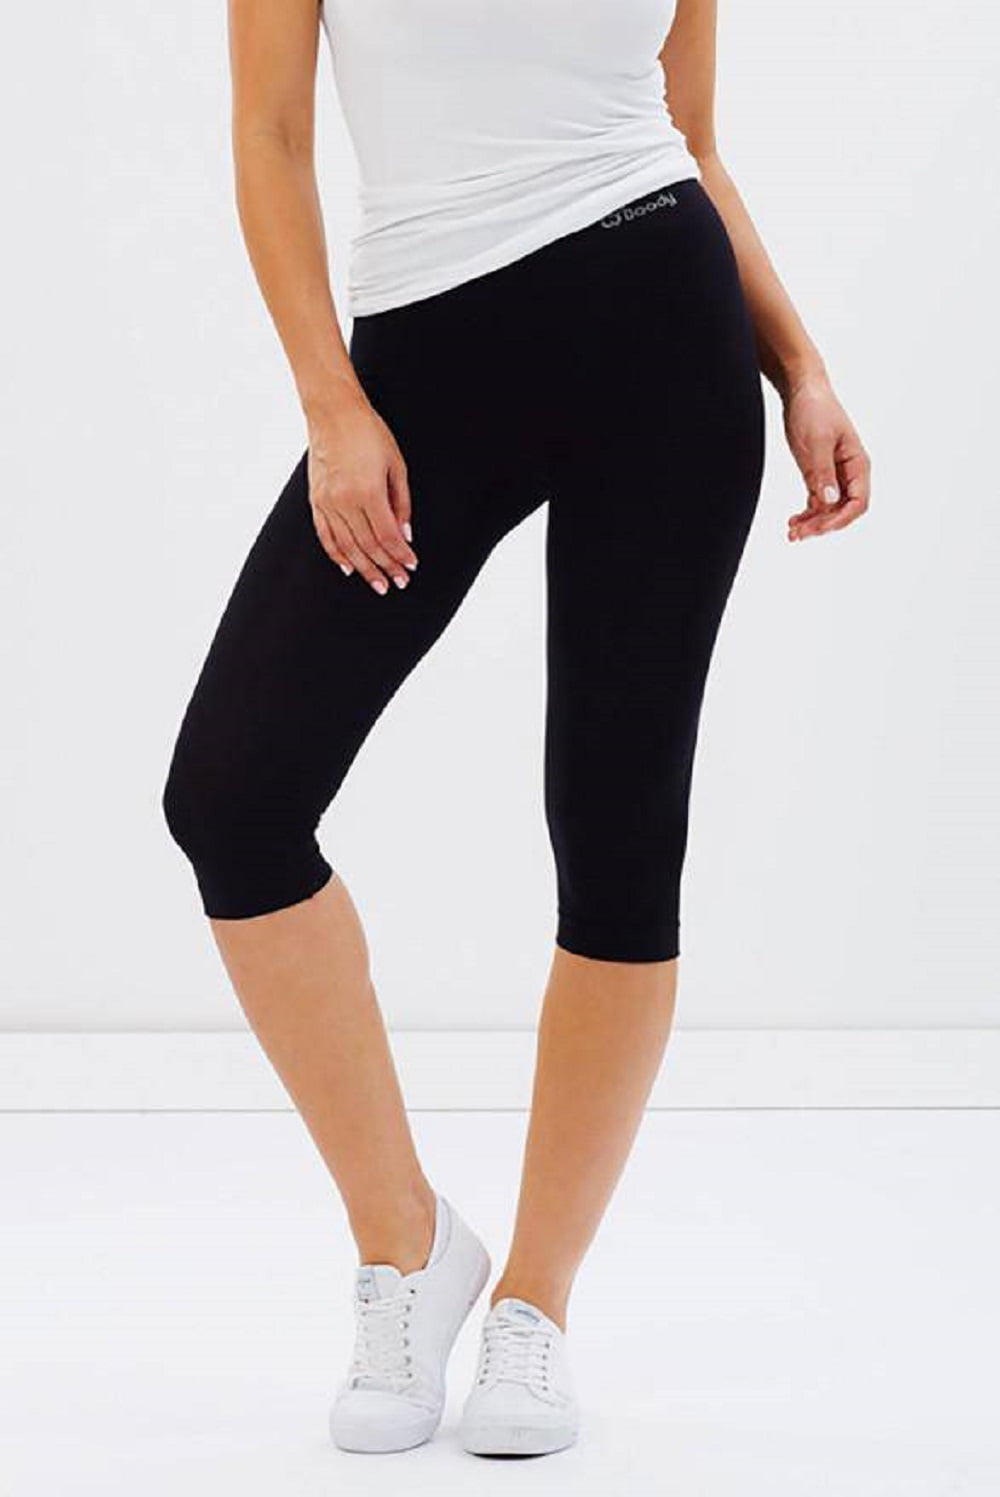 Boody Organic Bamboo Ecowear Women's 3/4 Legging - Black - X-small 